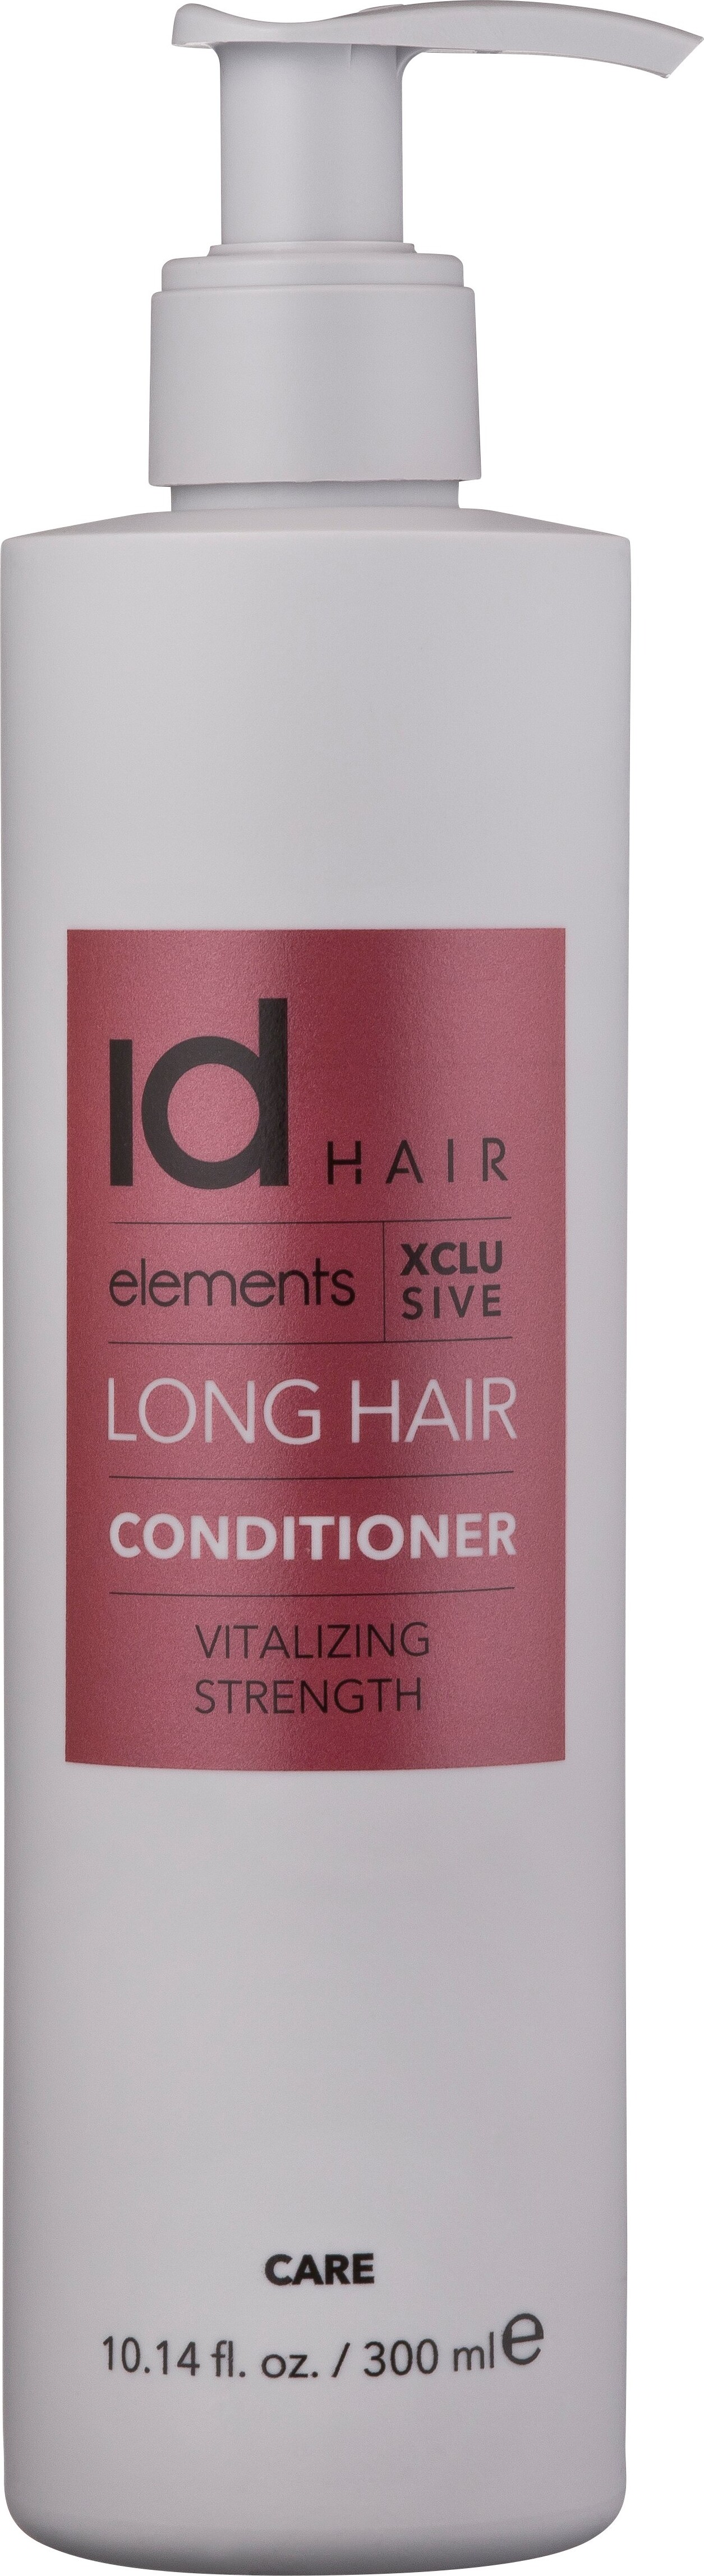 Billede af Id Hair - Elements Xclusive Long Hair Conditioner 300 Ml hos Gucca.dk